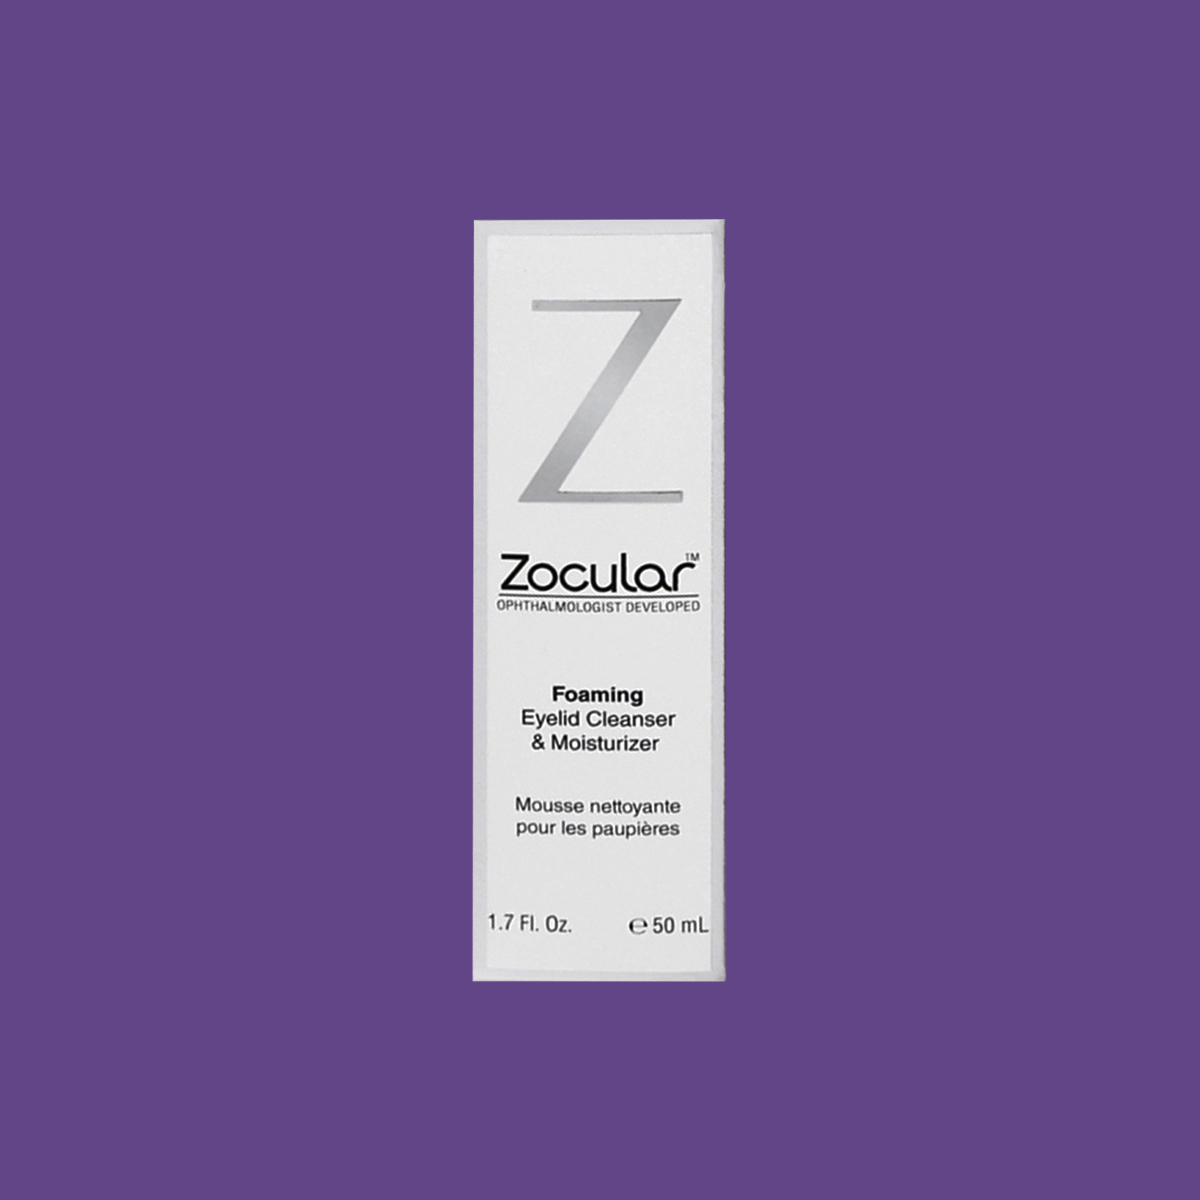 ZocuFoam Eyelid Cleanser Foam and Moisturizer (3 Month Supply)